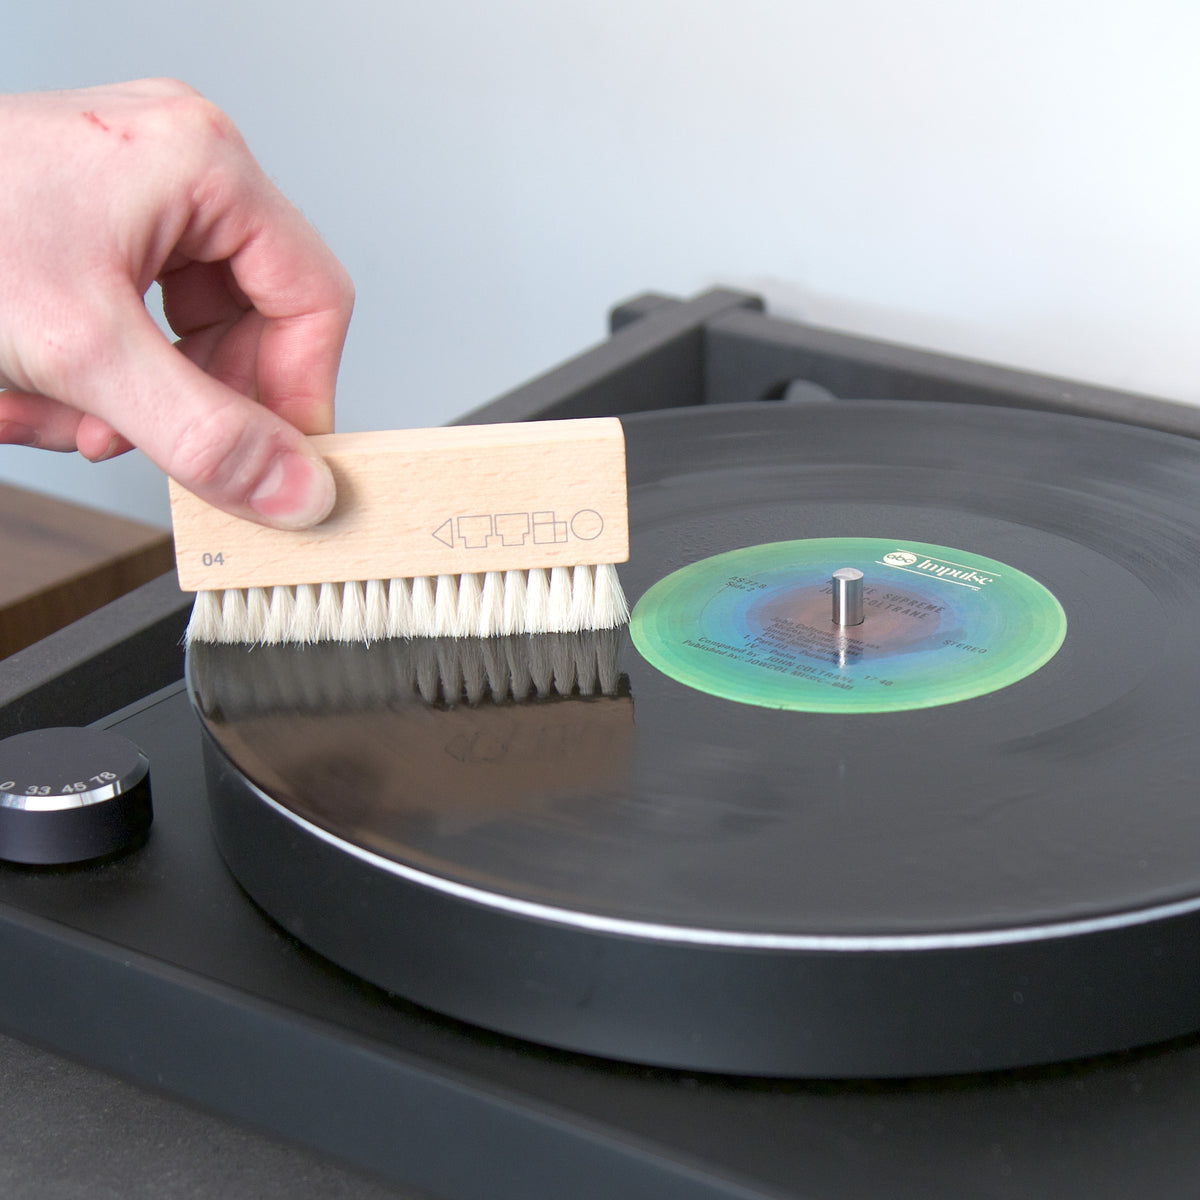 Stasis Wet & Dry Vinyl Record Brush